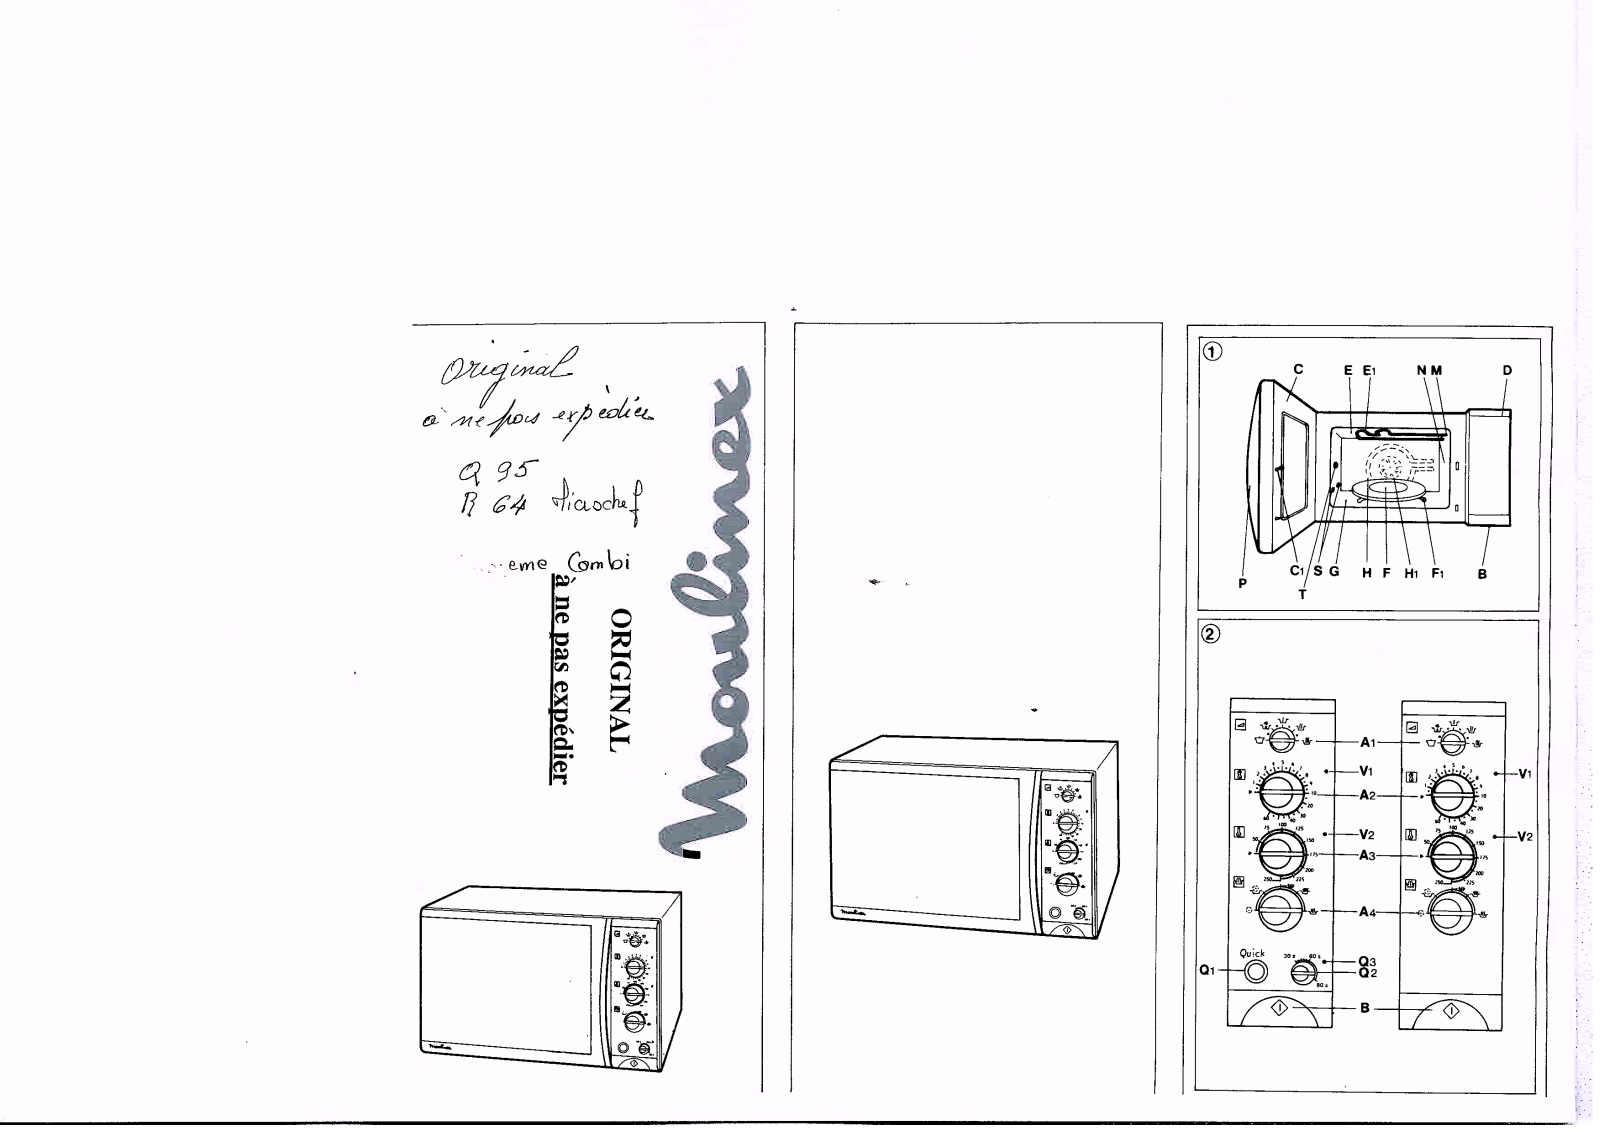 MOULINEX MICROCHEF Q95, MICROCHEF R64 User Manual